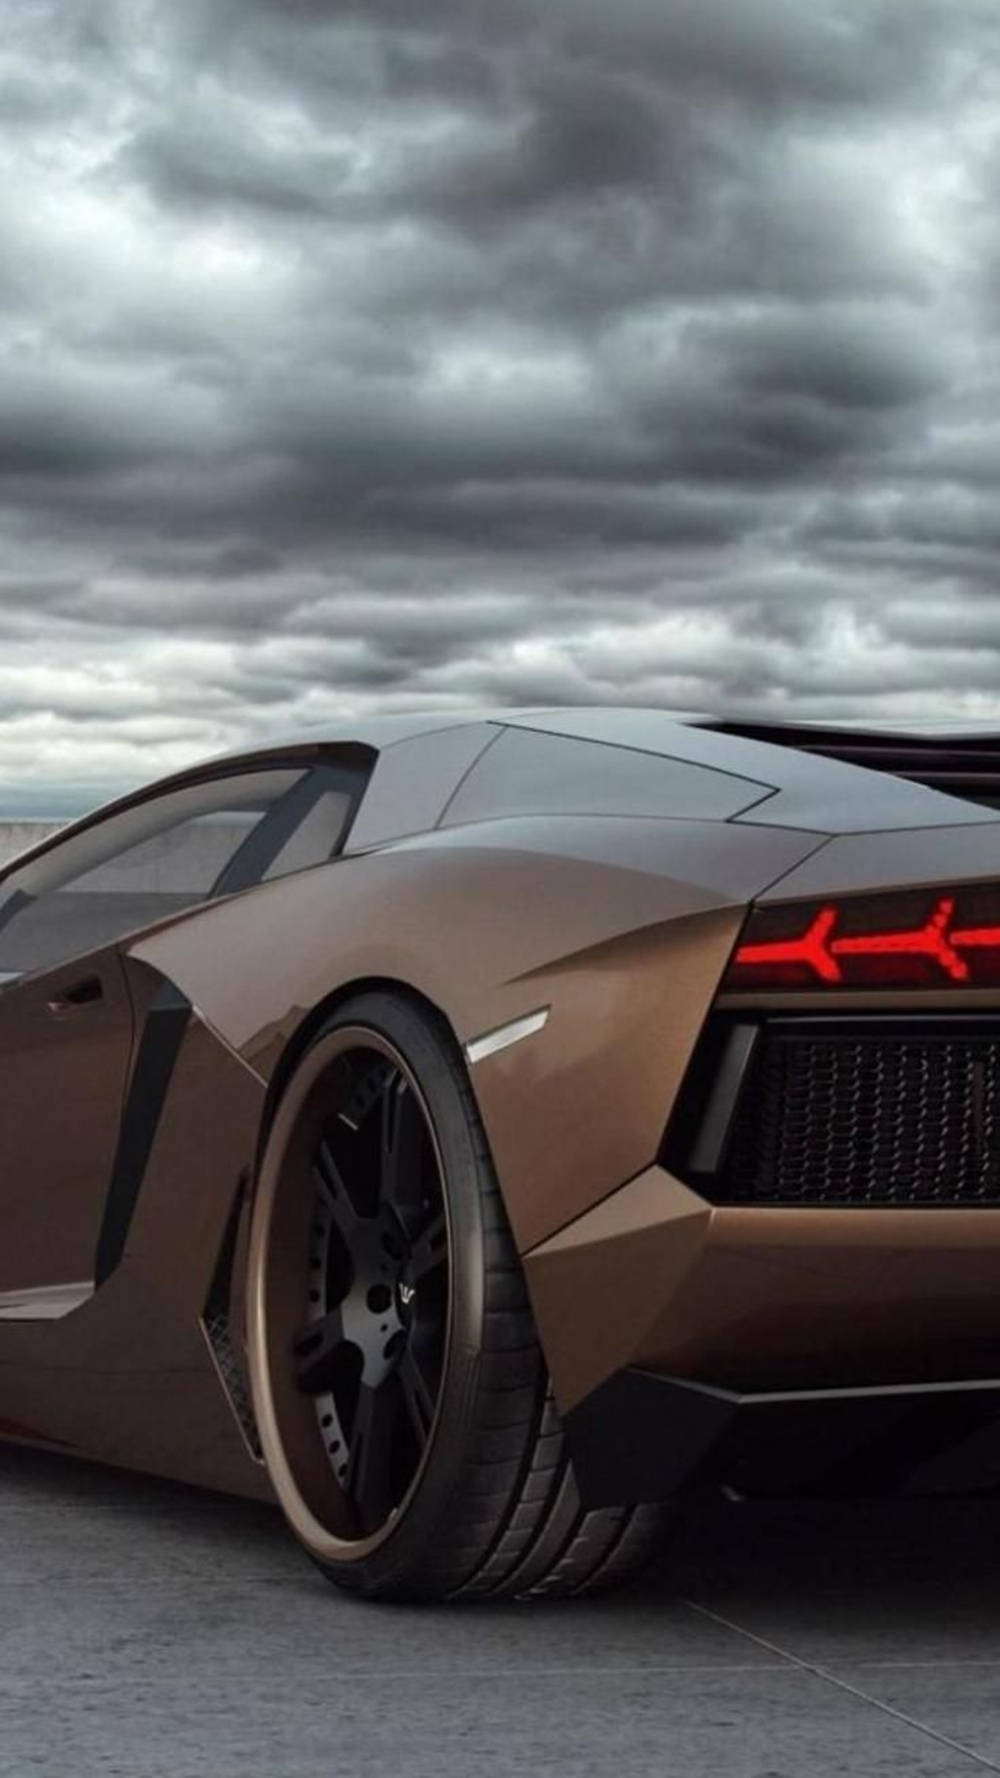 Adorable Image For Iphone Lamborghini Sreen